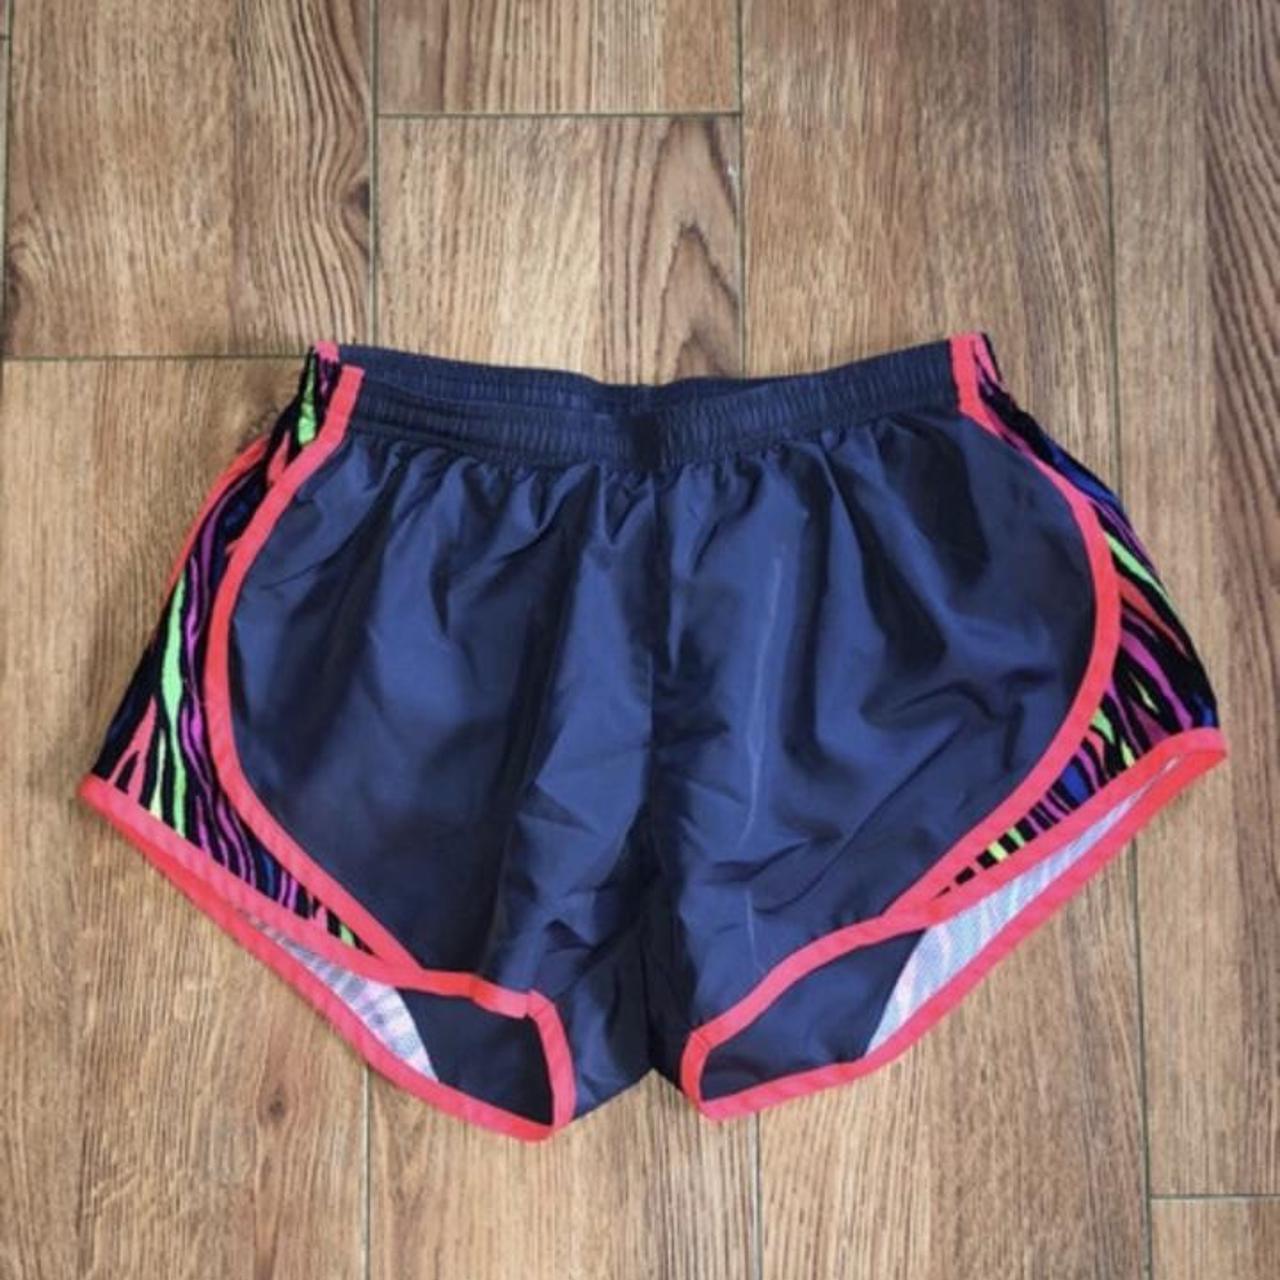 Grey & neon zebra print running shorts 👟 Size S... - Depop